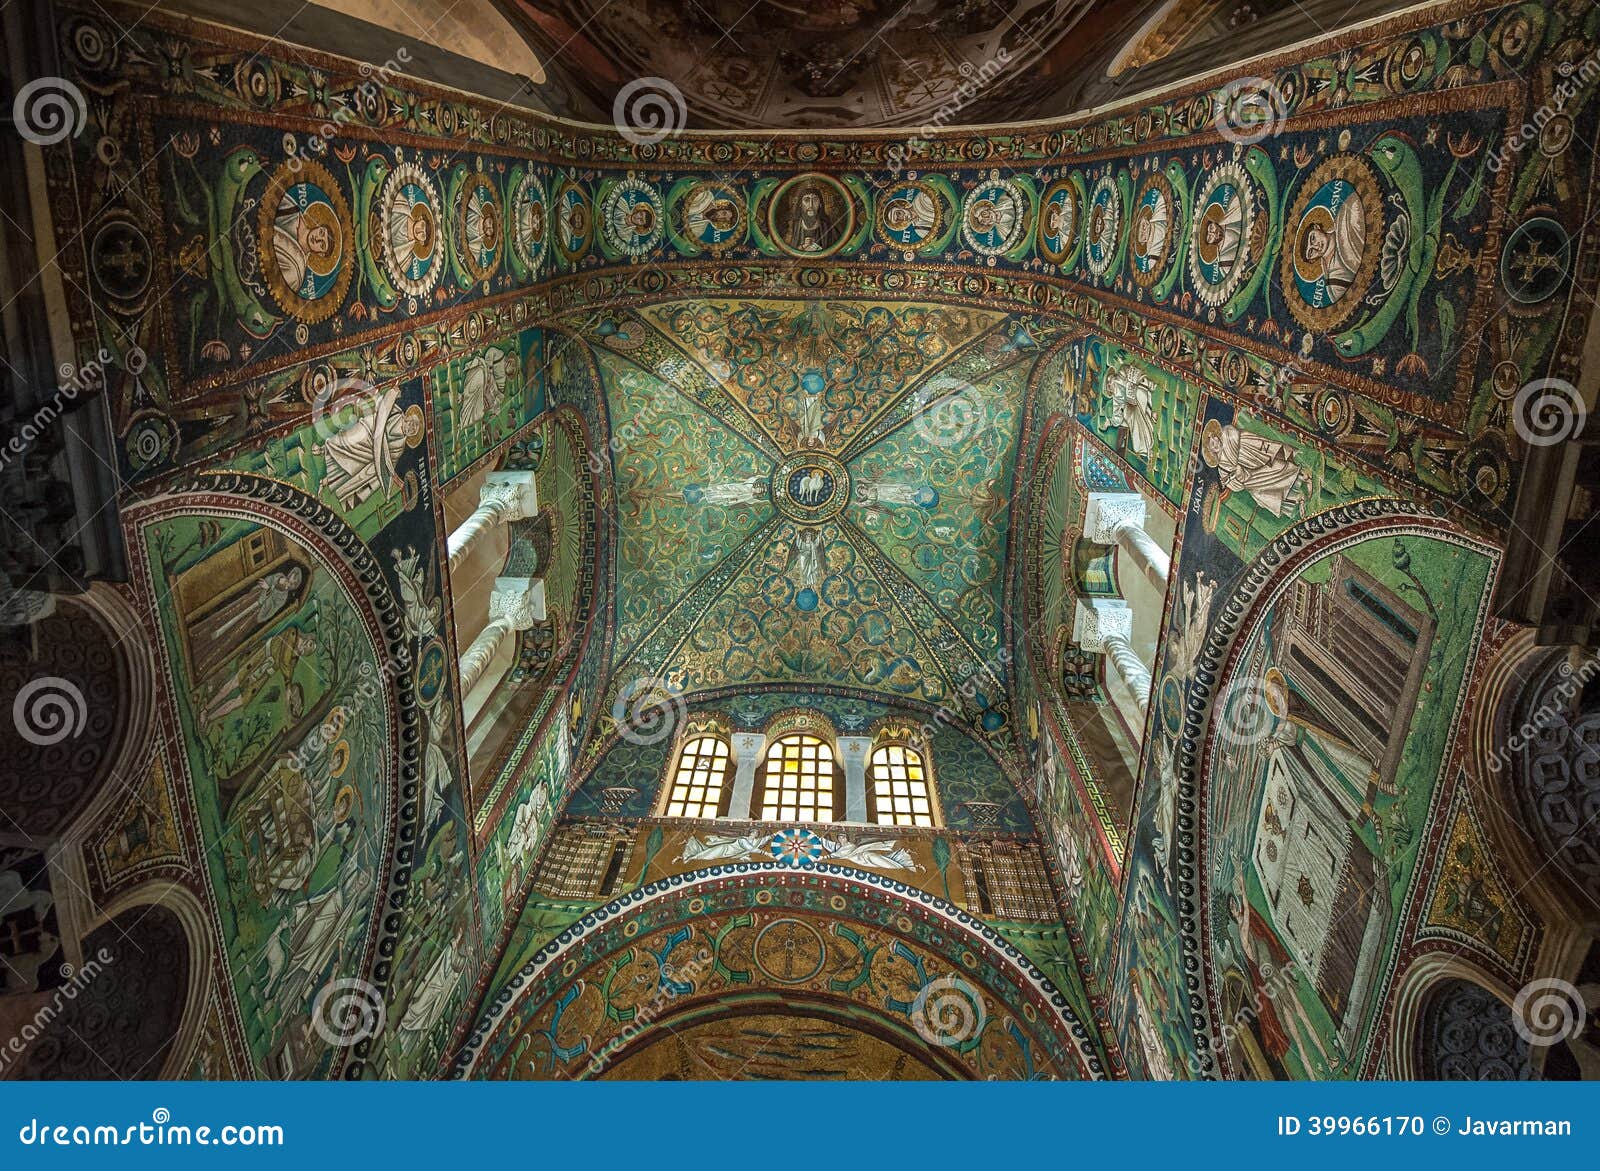 mosaics of basilica of san vitale, ravenna, italy